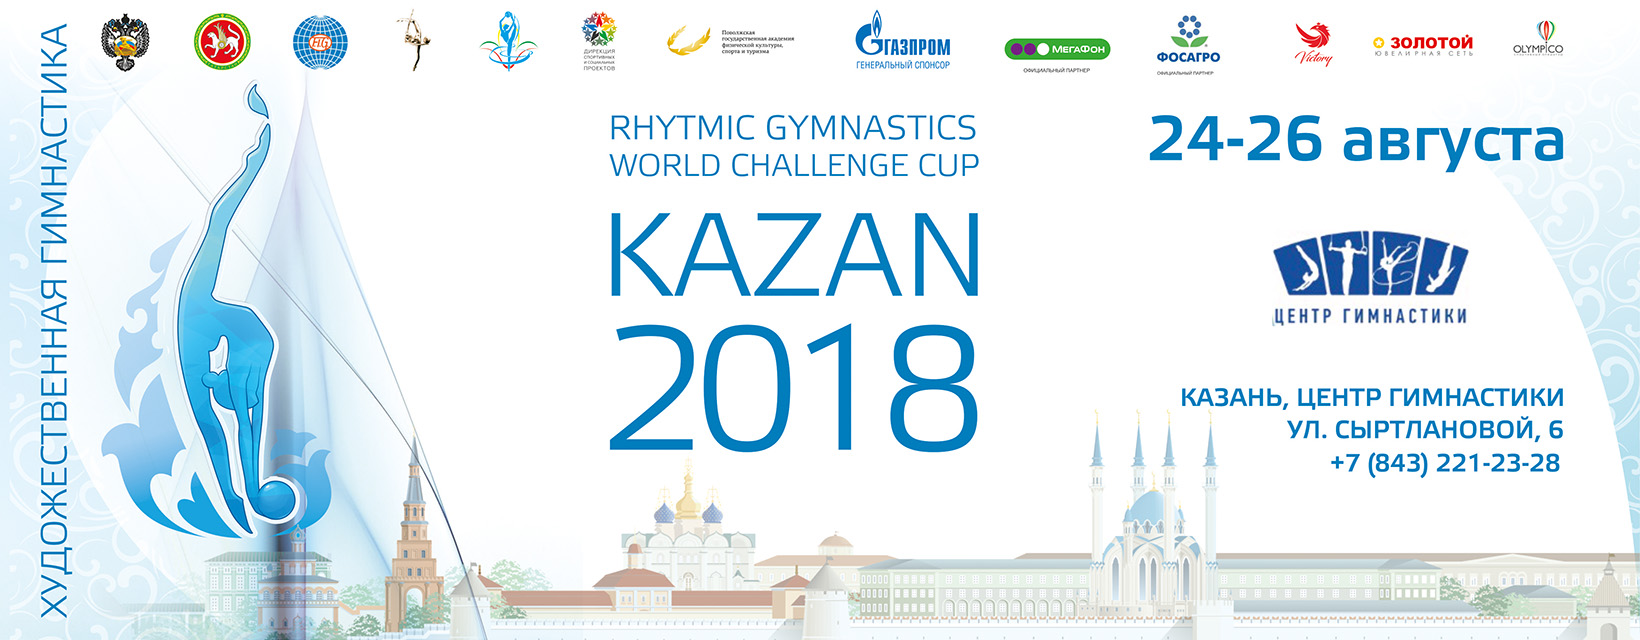 World Challenge Cup Kazan 2018 cover